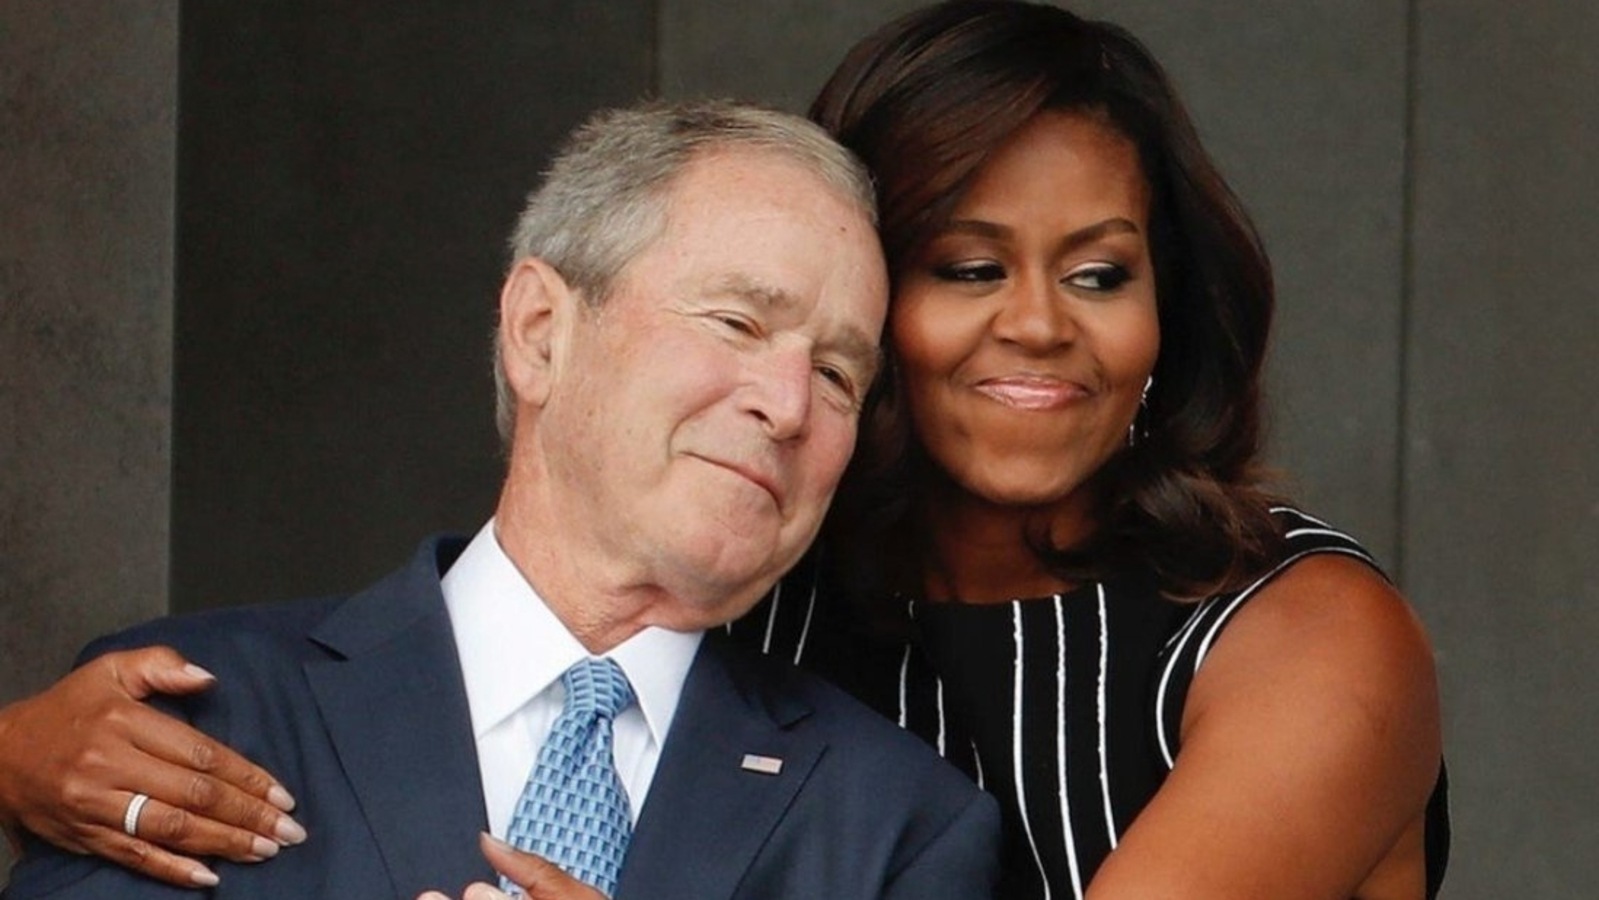 George W. Bush with beautiful, Wife Laura Bush 